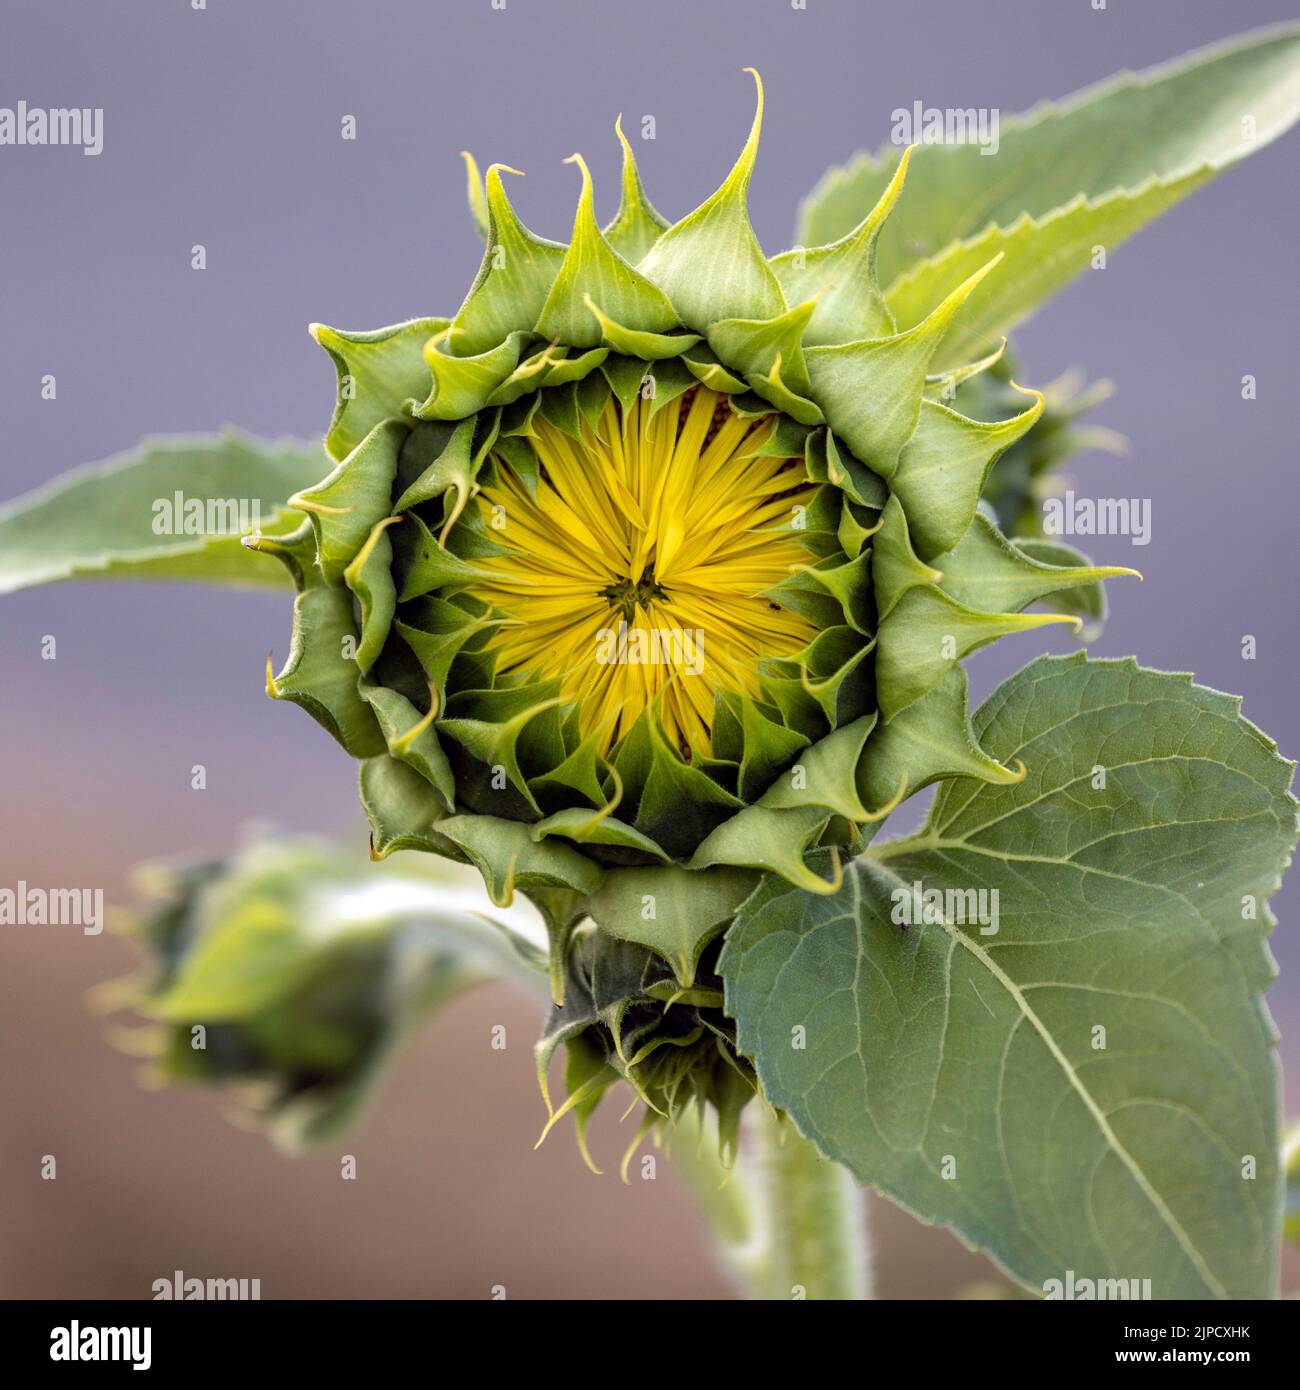 Budding sunflower about to burst open Stock Photo